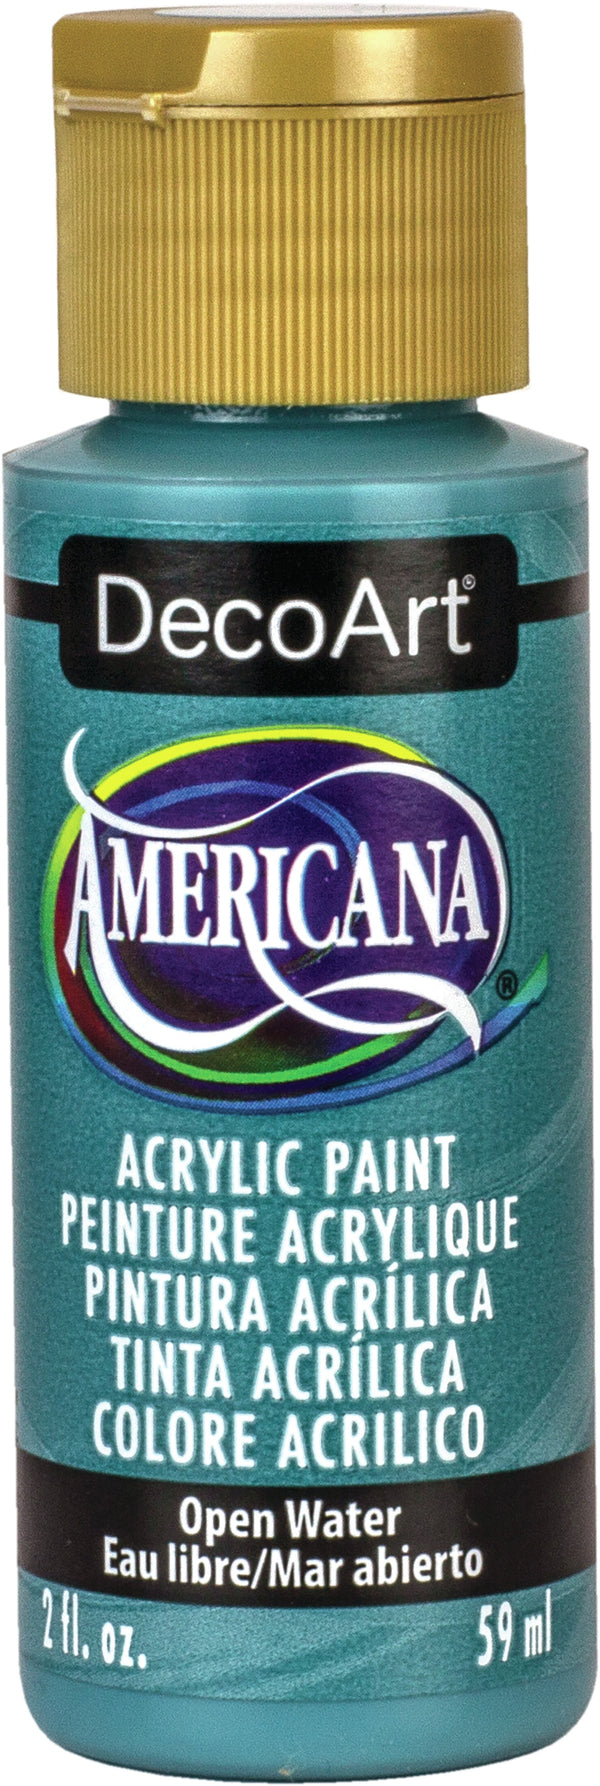 Americana Acrylic Paint 2oz - Open Water